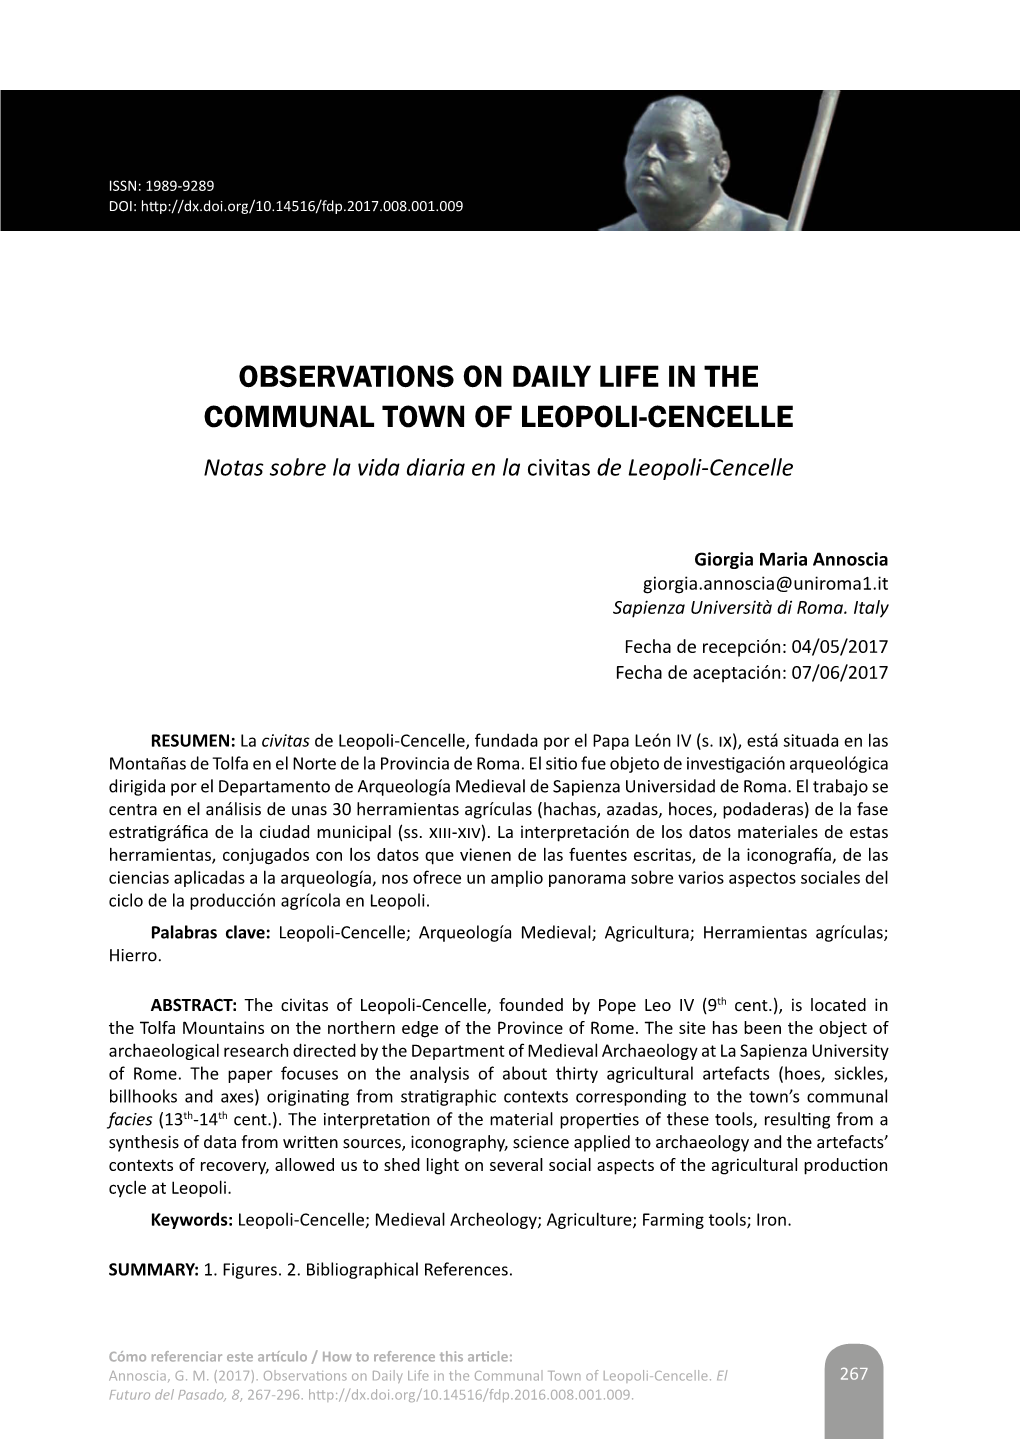 OBSERVATIONS on DAILY LIFE in the COMMUNAL TOWN of LEOPOLI-CENCELLE Notas Sobre La Vida Diaria En La Civitas De Leopoli-Cencelle